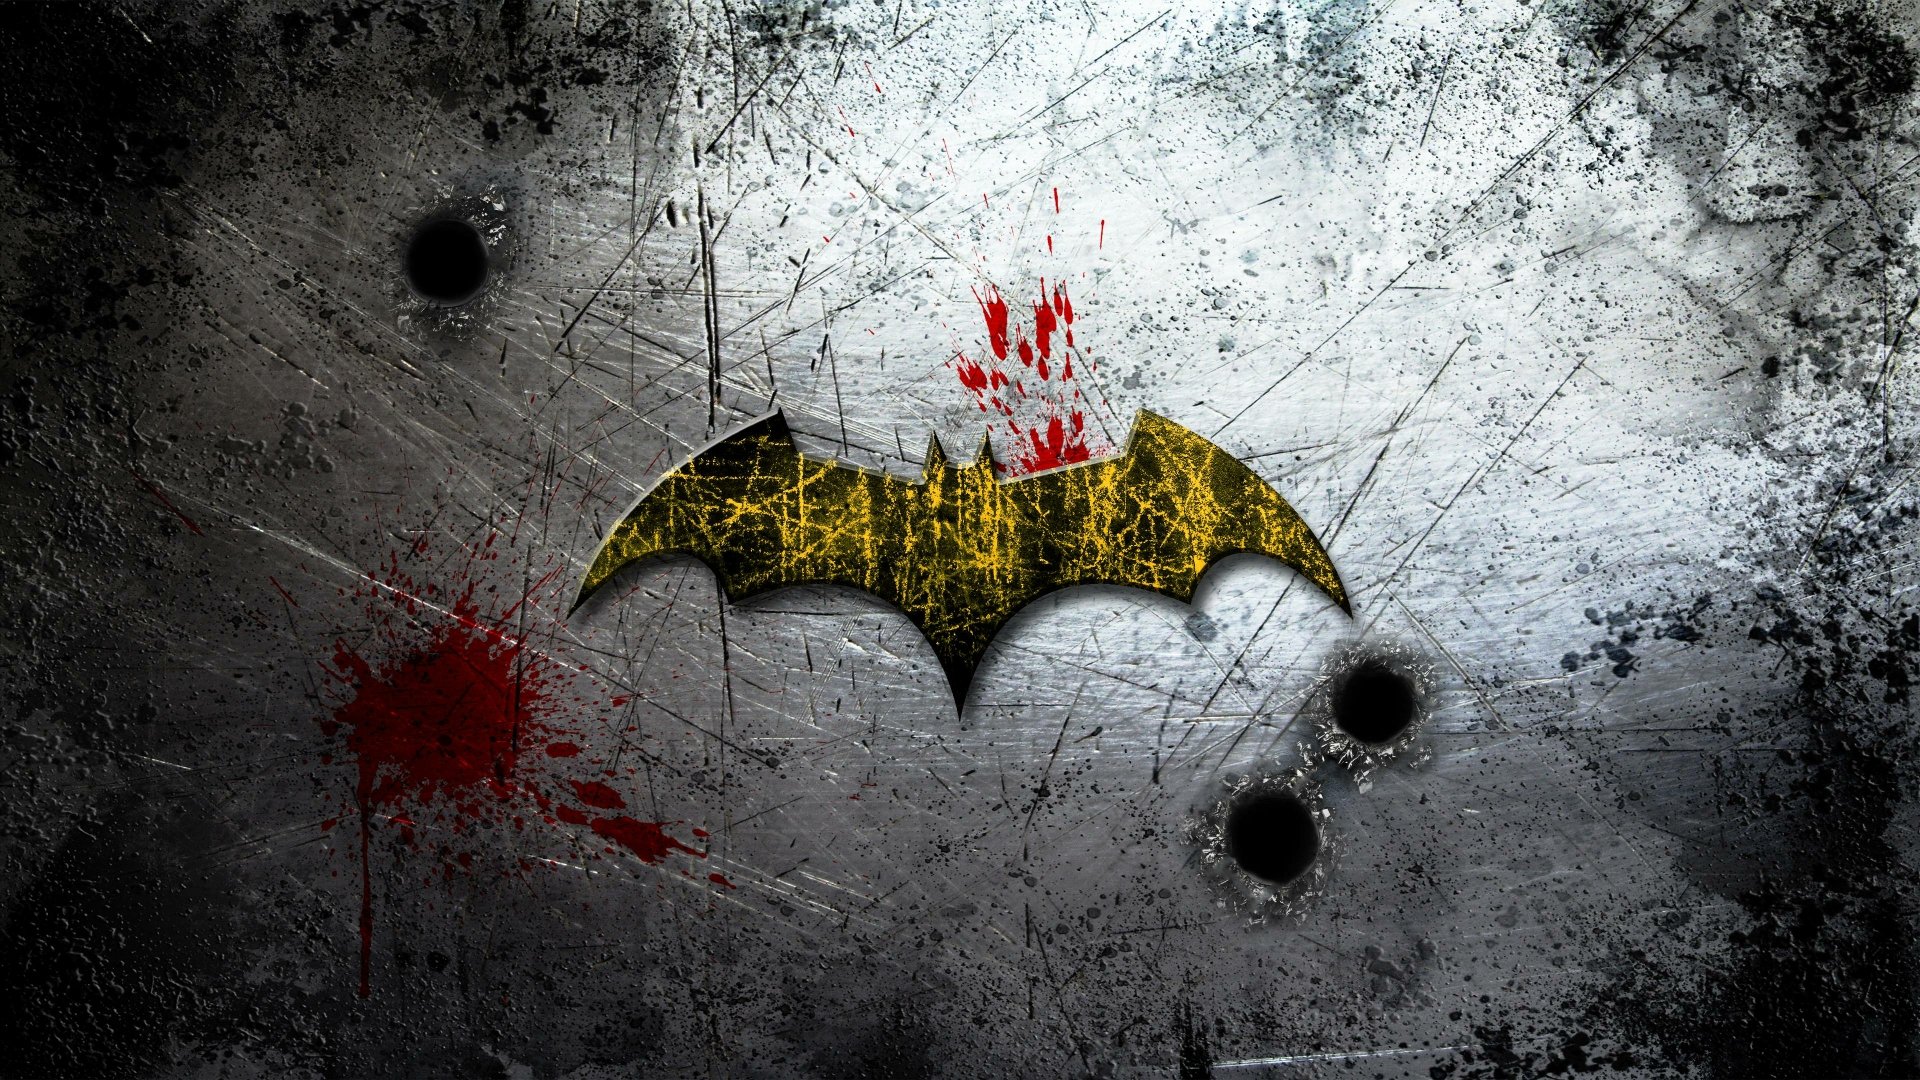 Batman 4k Ultra HD Wallpaper | Background Image ...